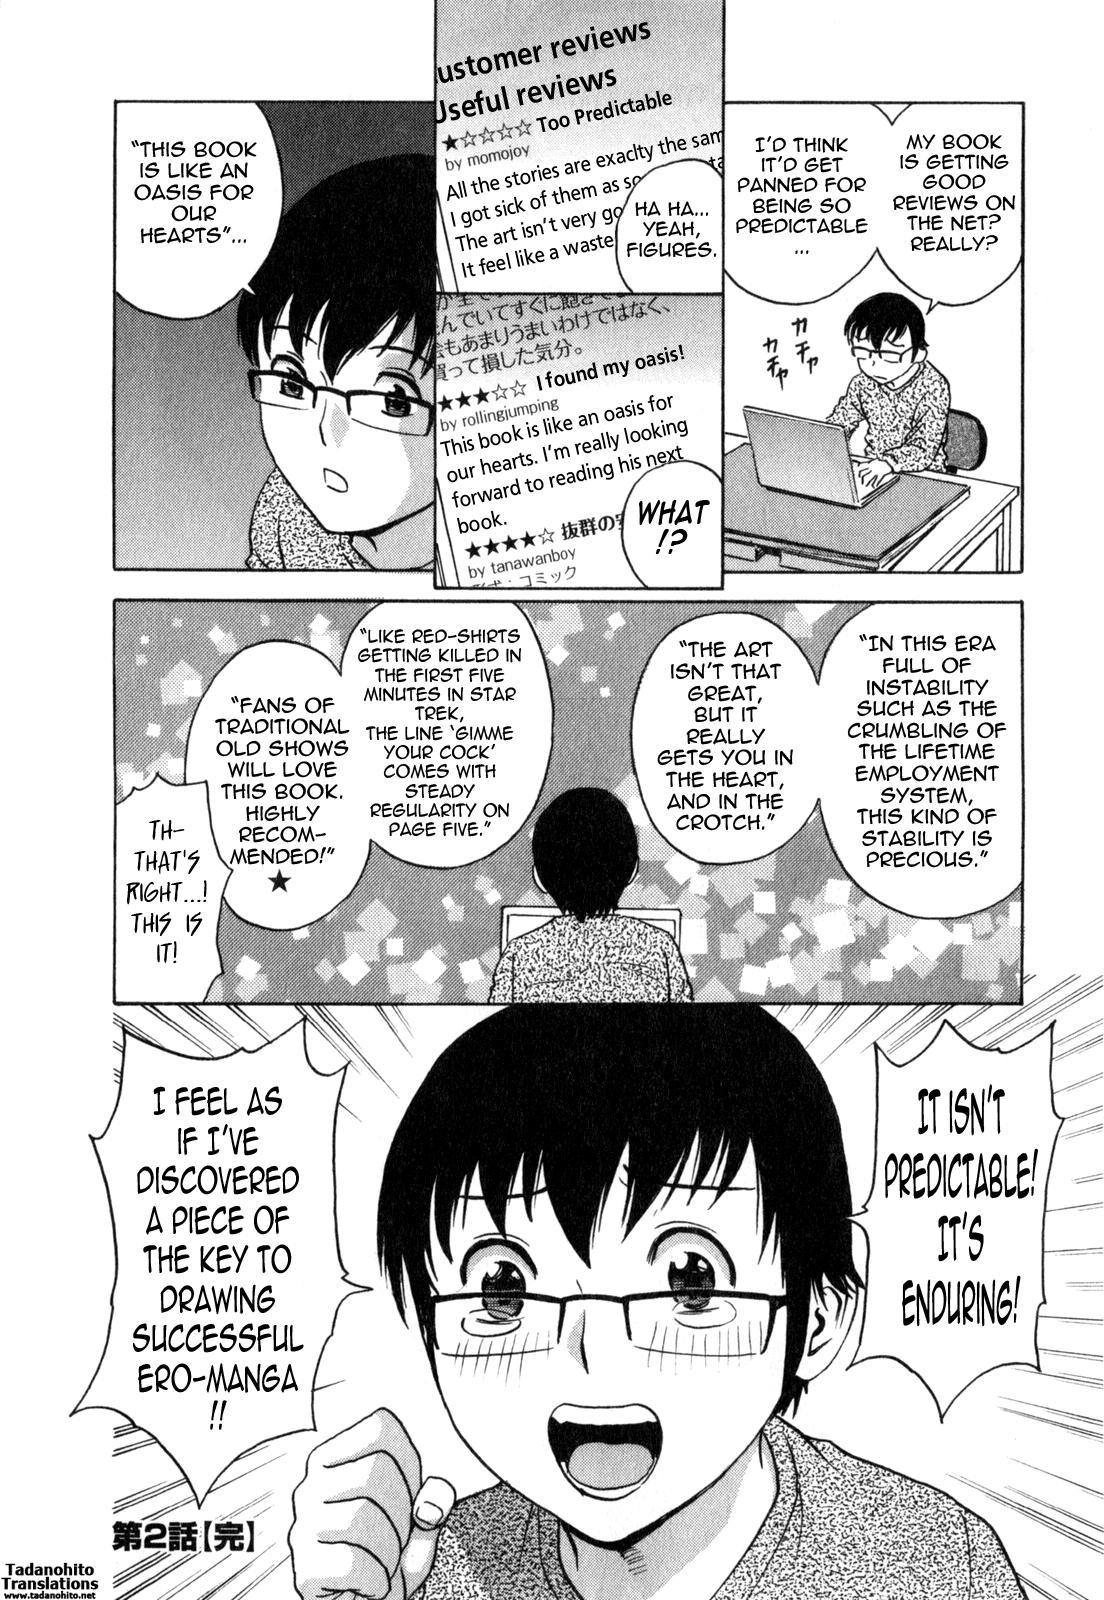 [Hidemaru] Life with Married Women Just Like a Manga 3 - Ch. 1-5 [English] {Tadanohito} 44